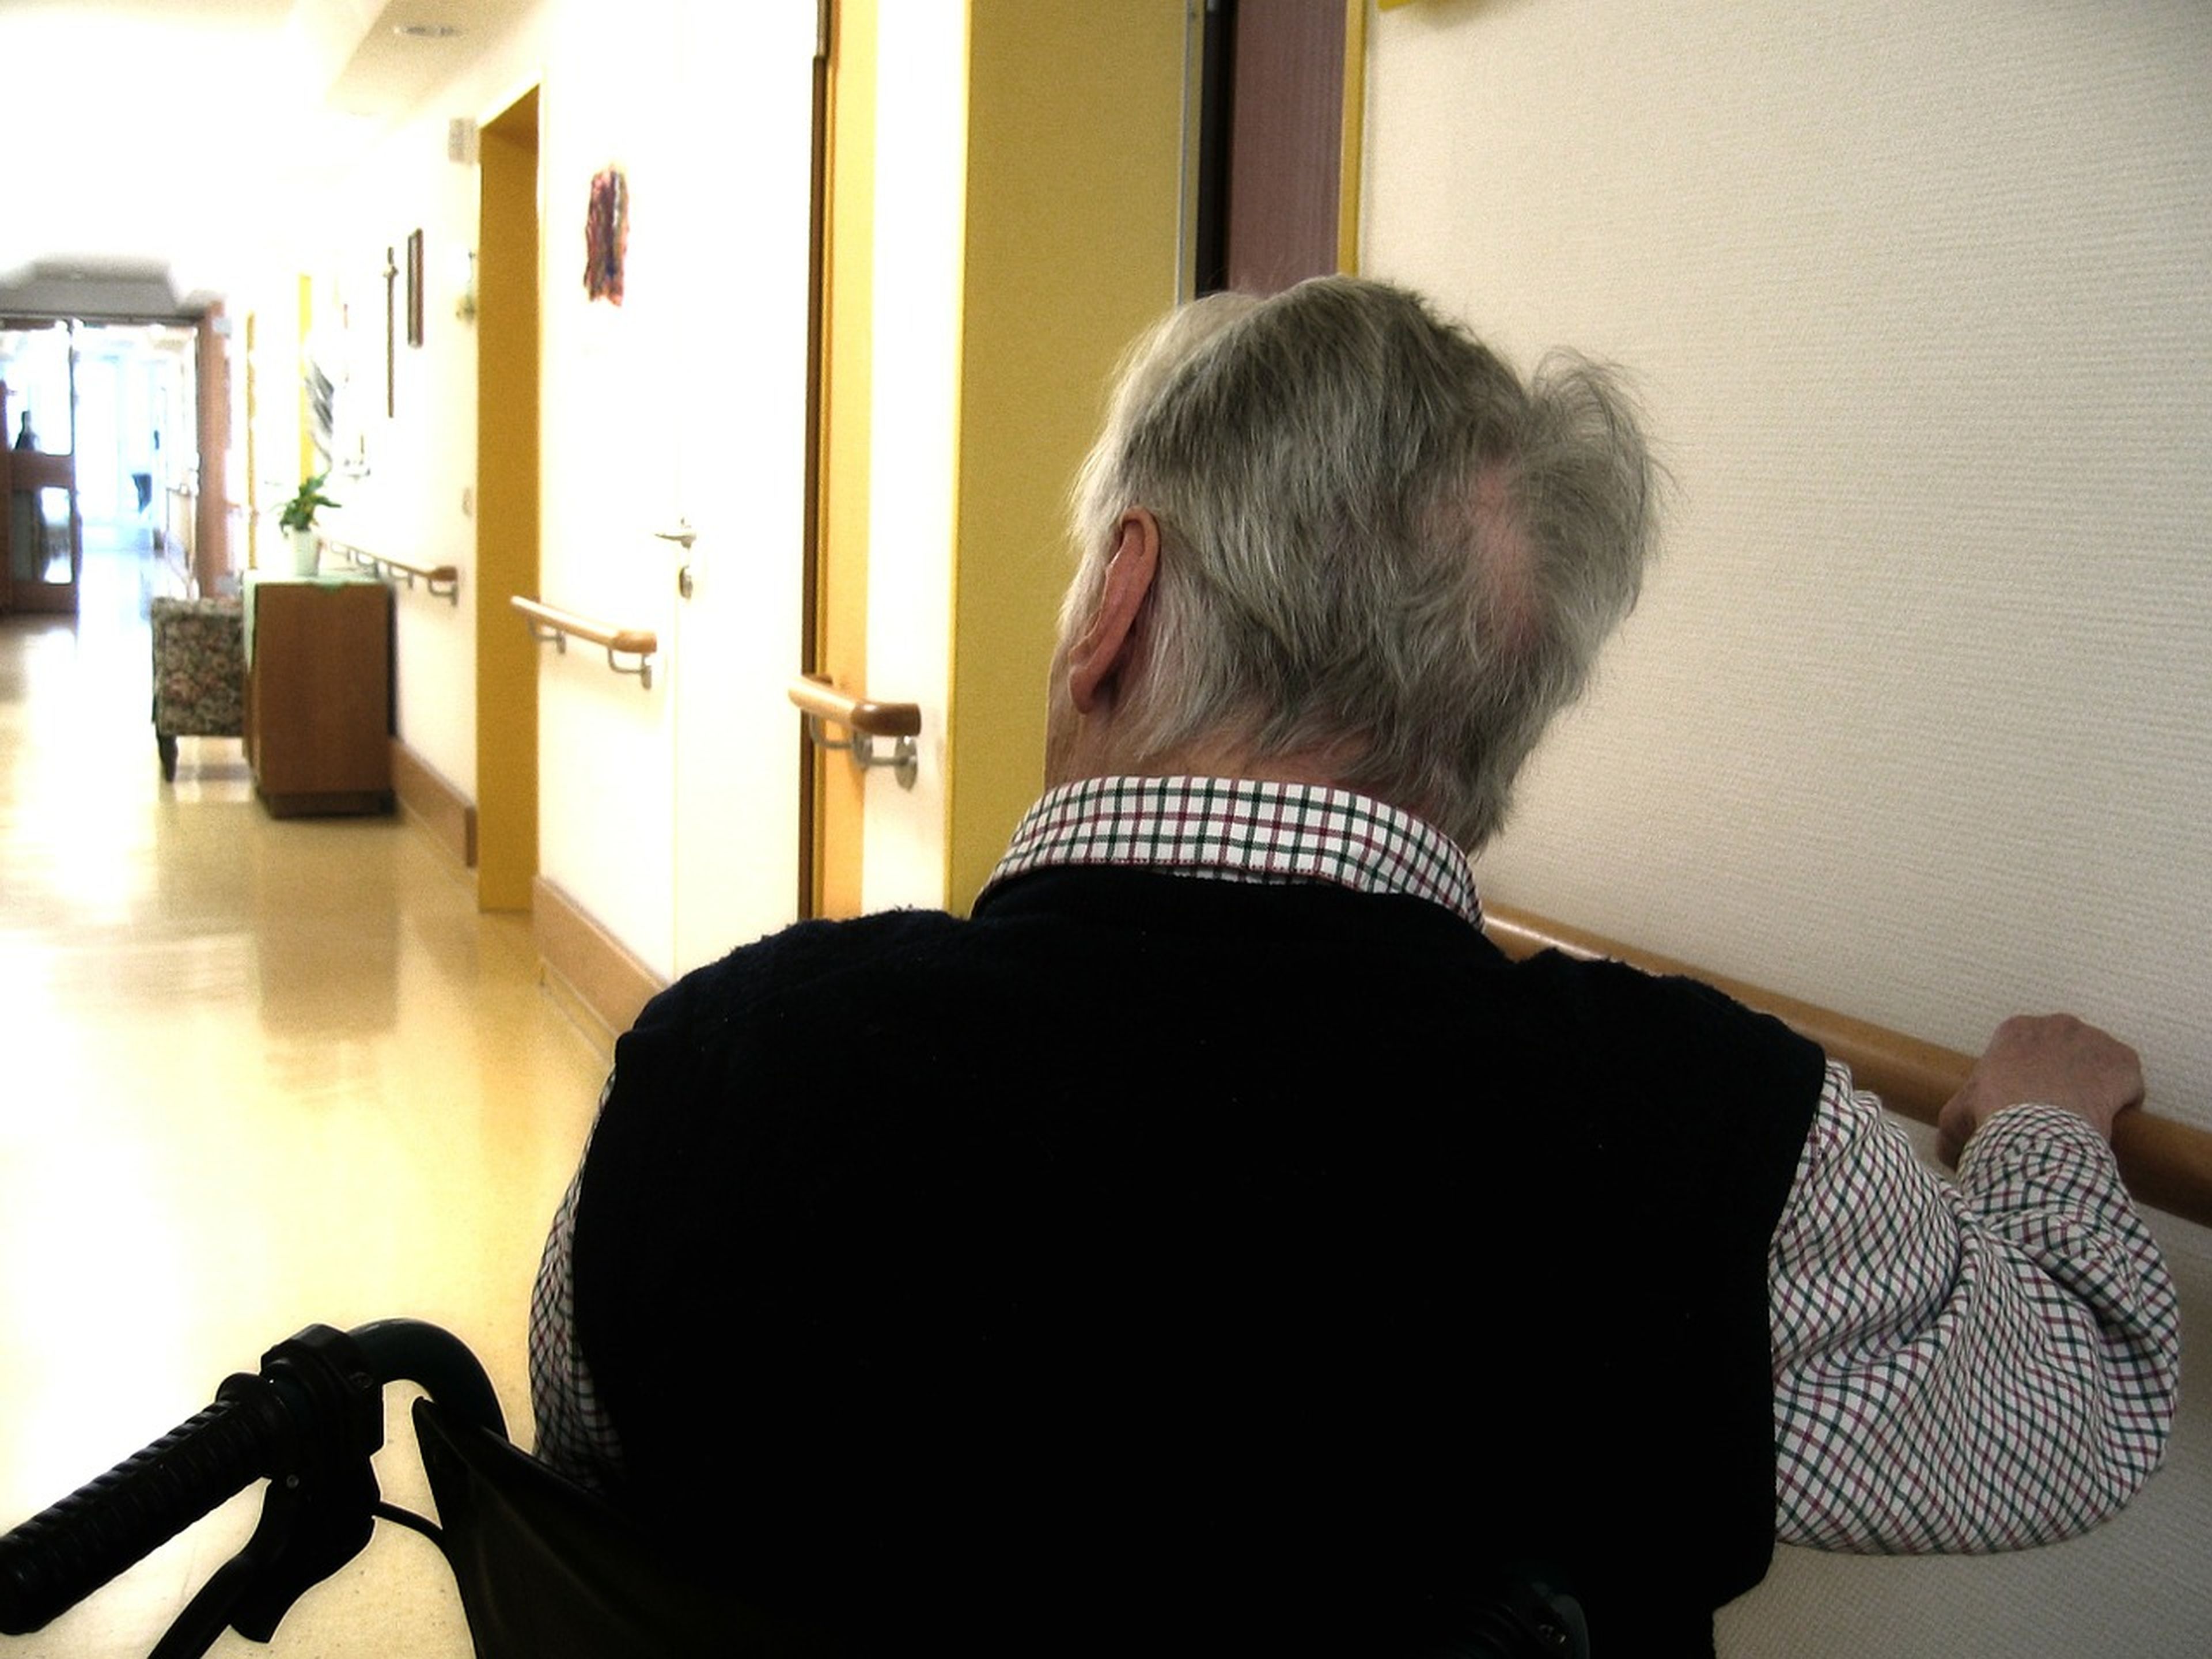 Persona mayor con Alzheimer